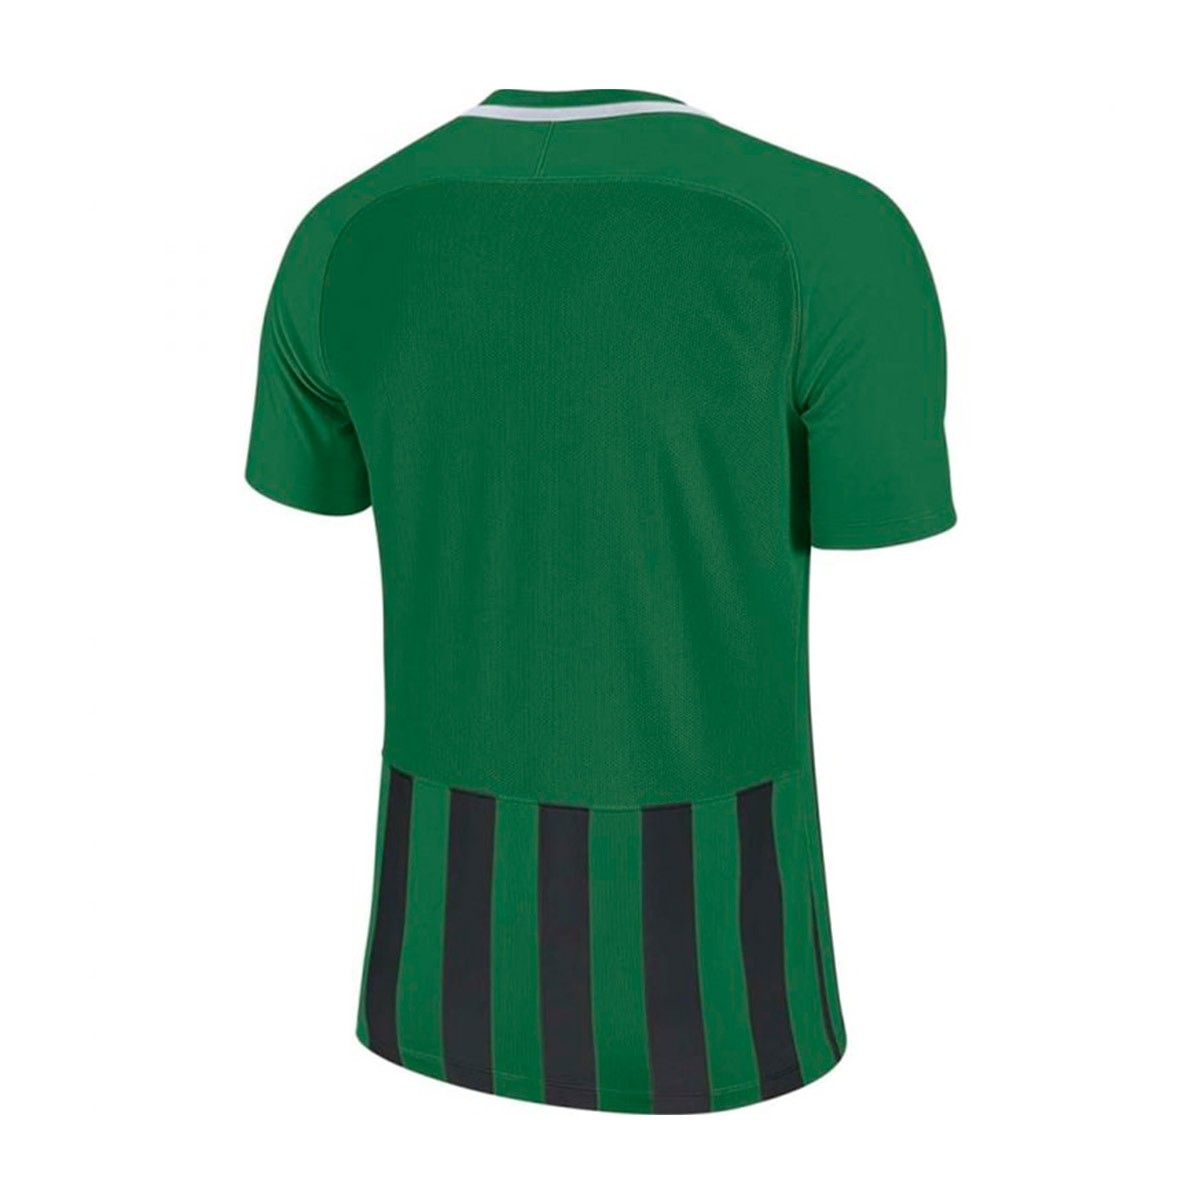 Jersey Nike Striped Division III m/c Pine green-Black - Fútbol Emotion